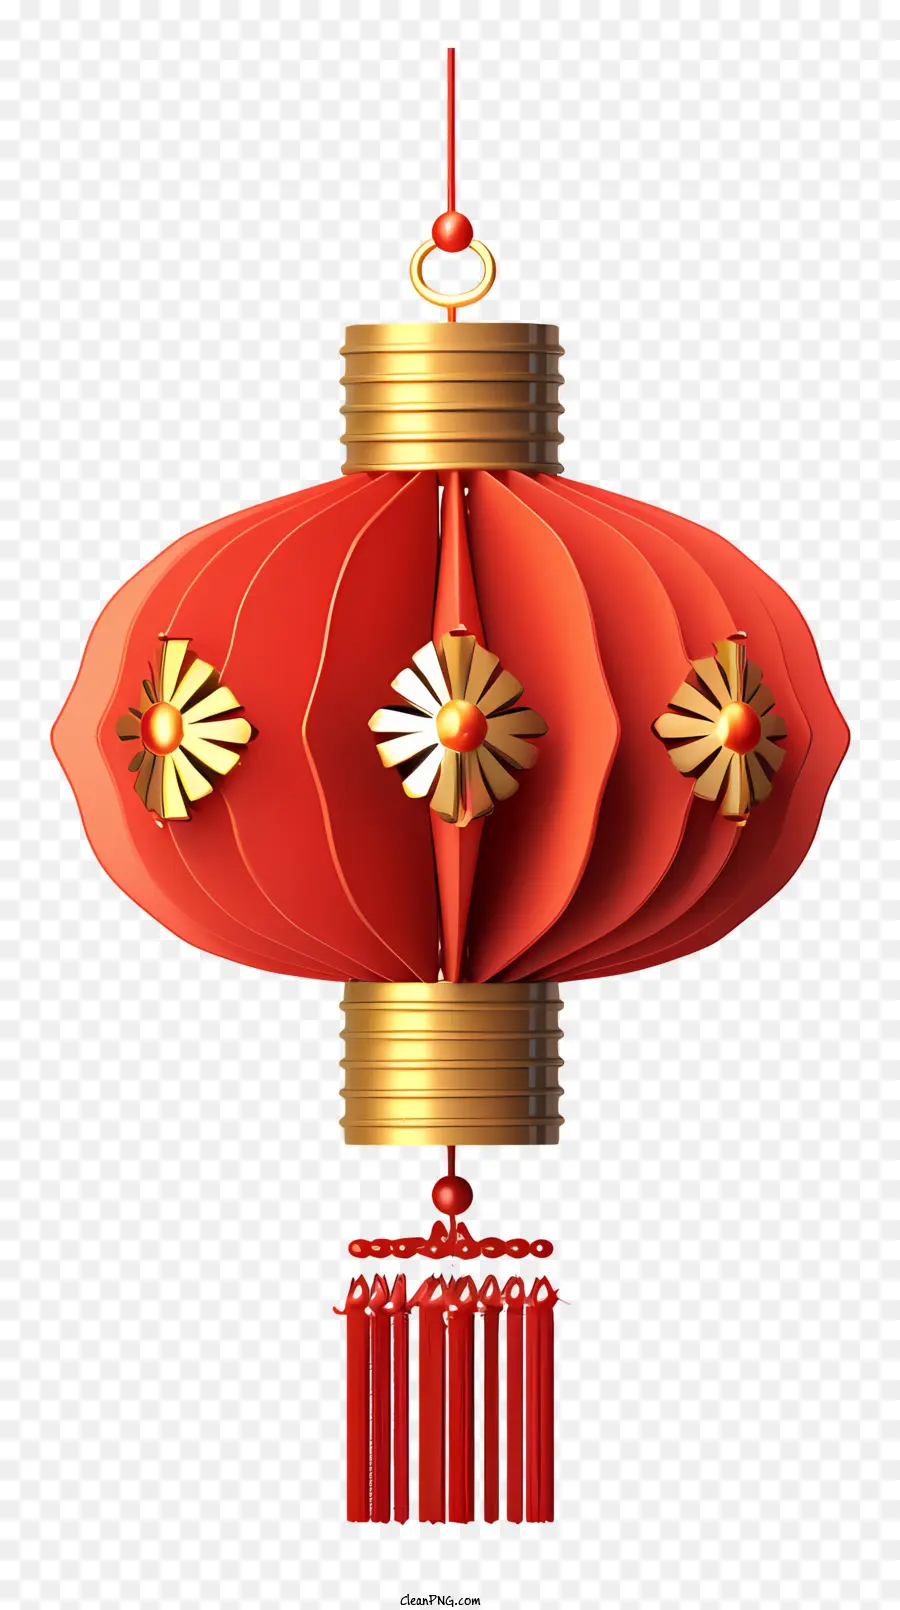 red chinese lantern hanging decoration lantern tassel gold and silver decoration fringe lantern